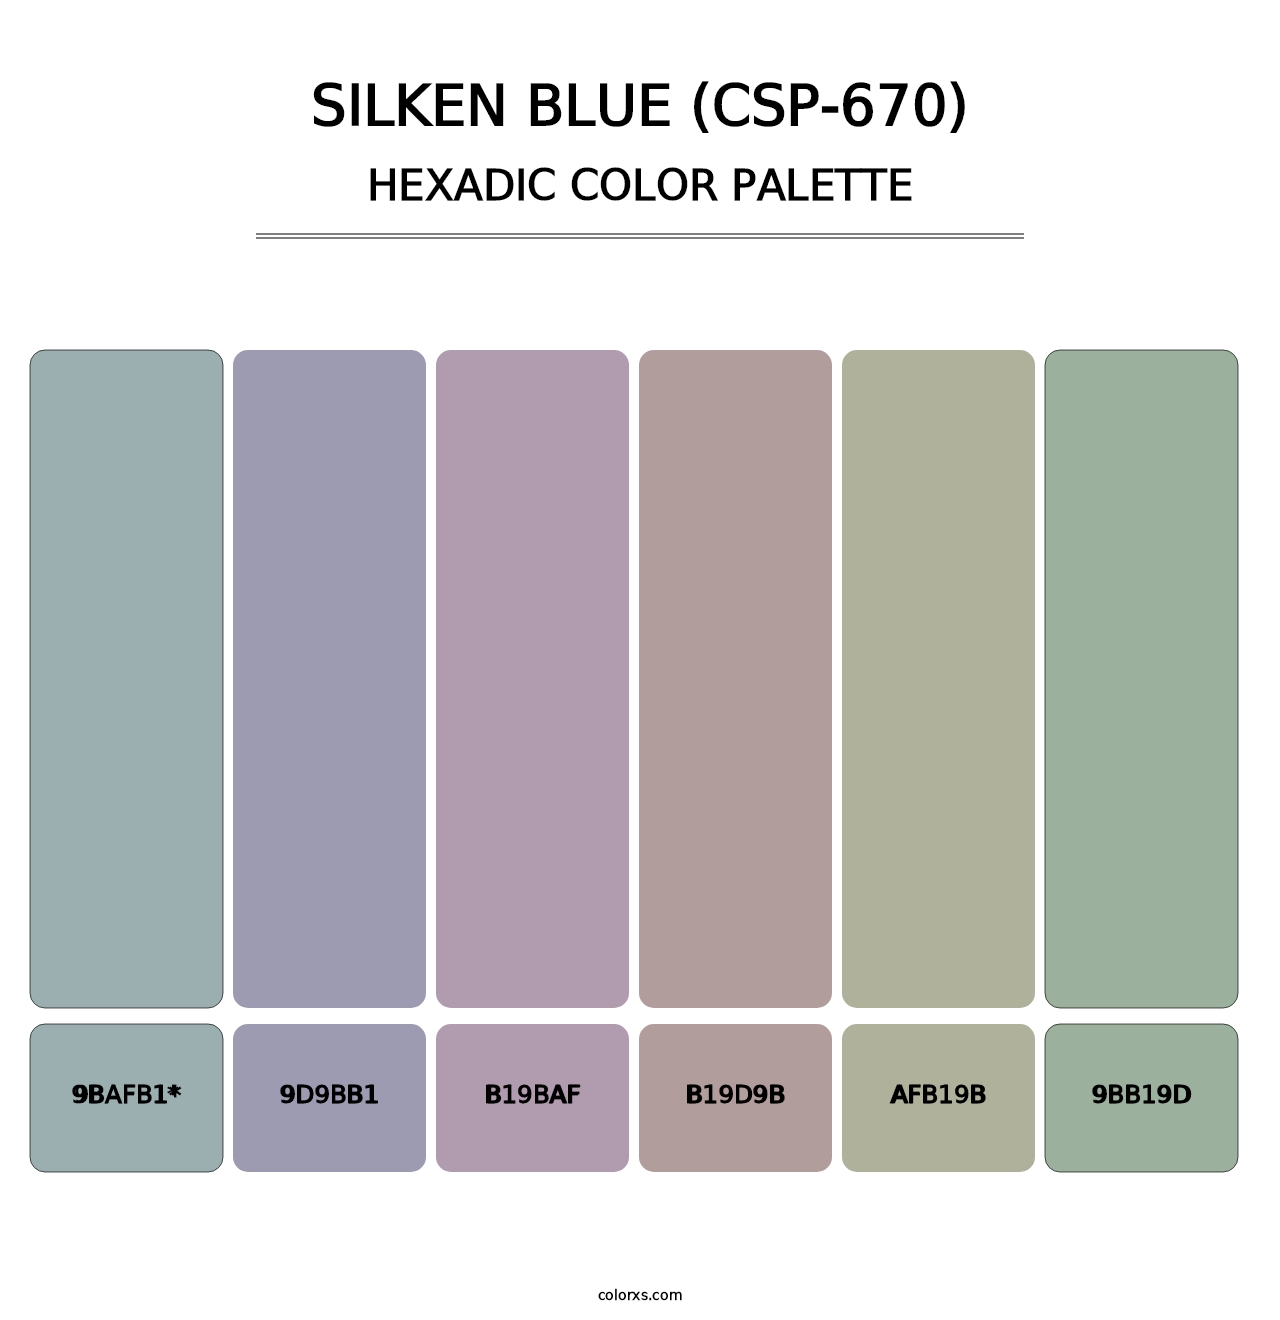 Silken Blue (CSP-670) - Hexadic Color Palette